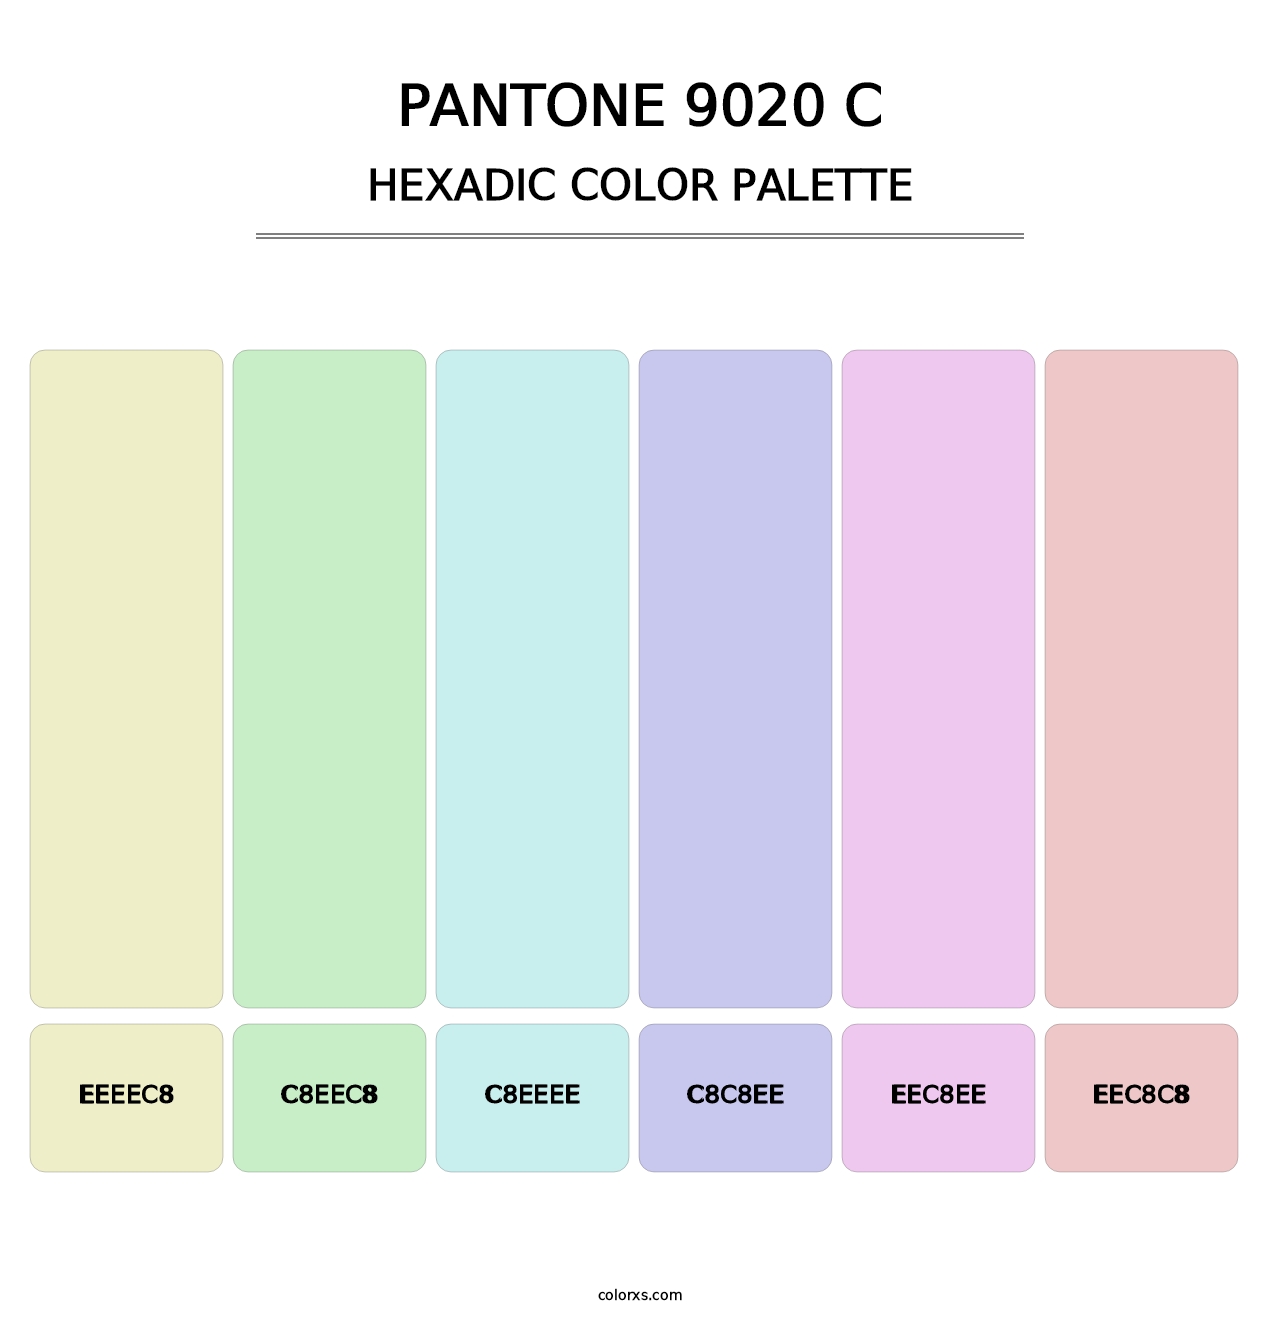 PANTONE 9020 C - Hexadic Color Palette